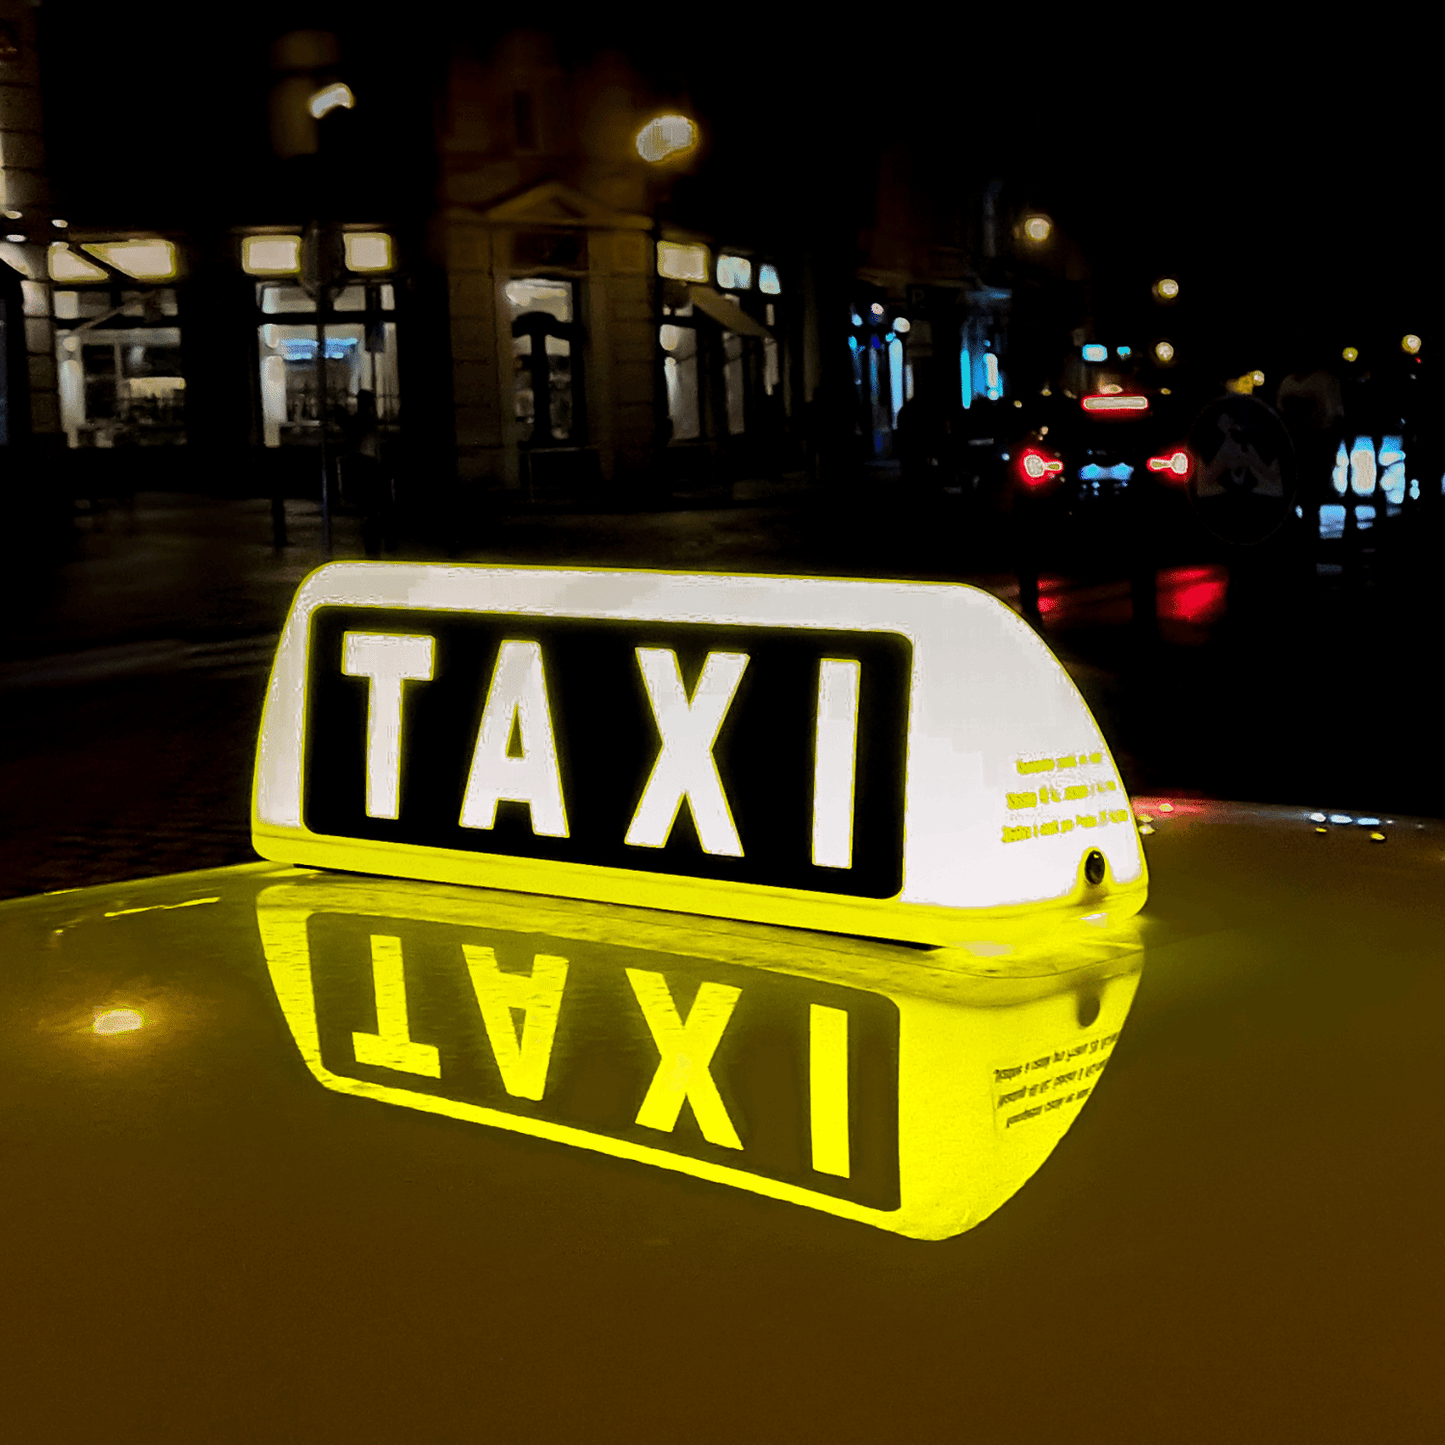 Taxi Liability